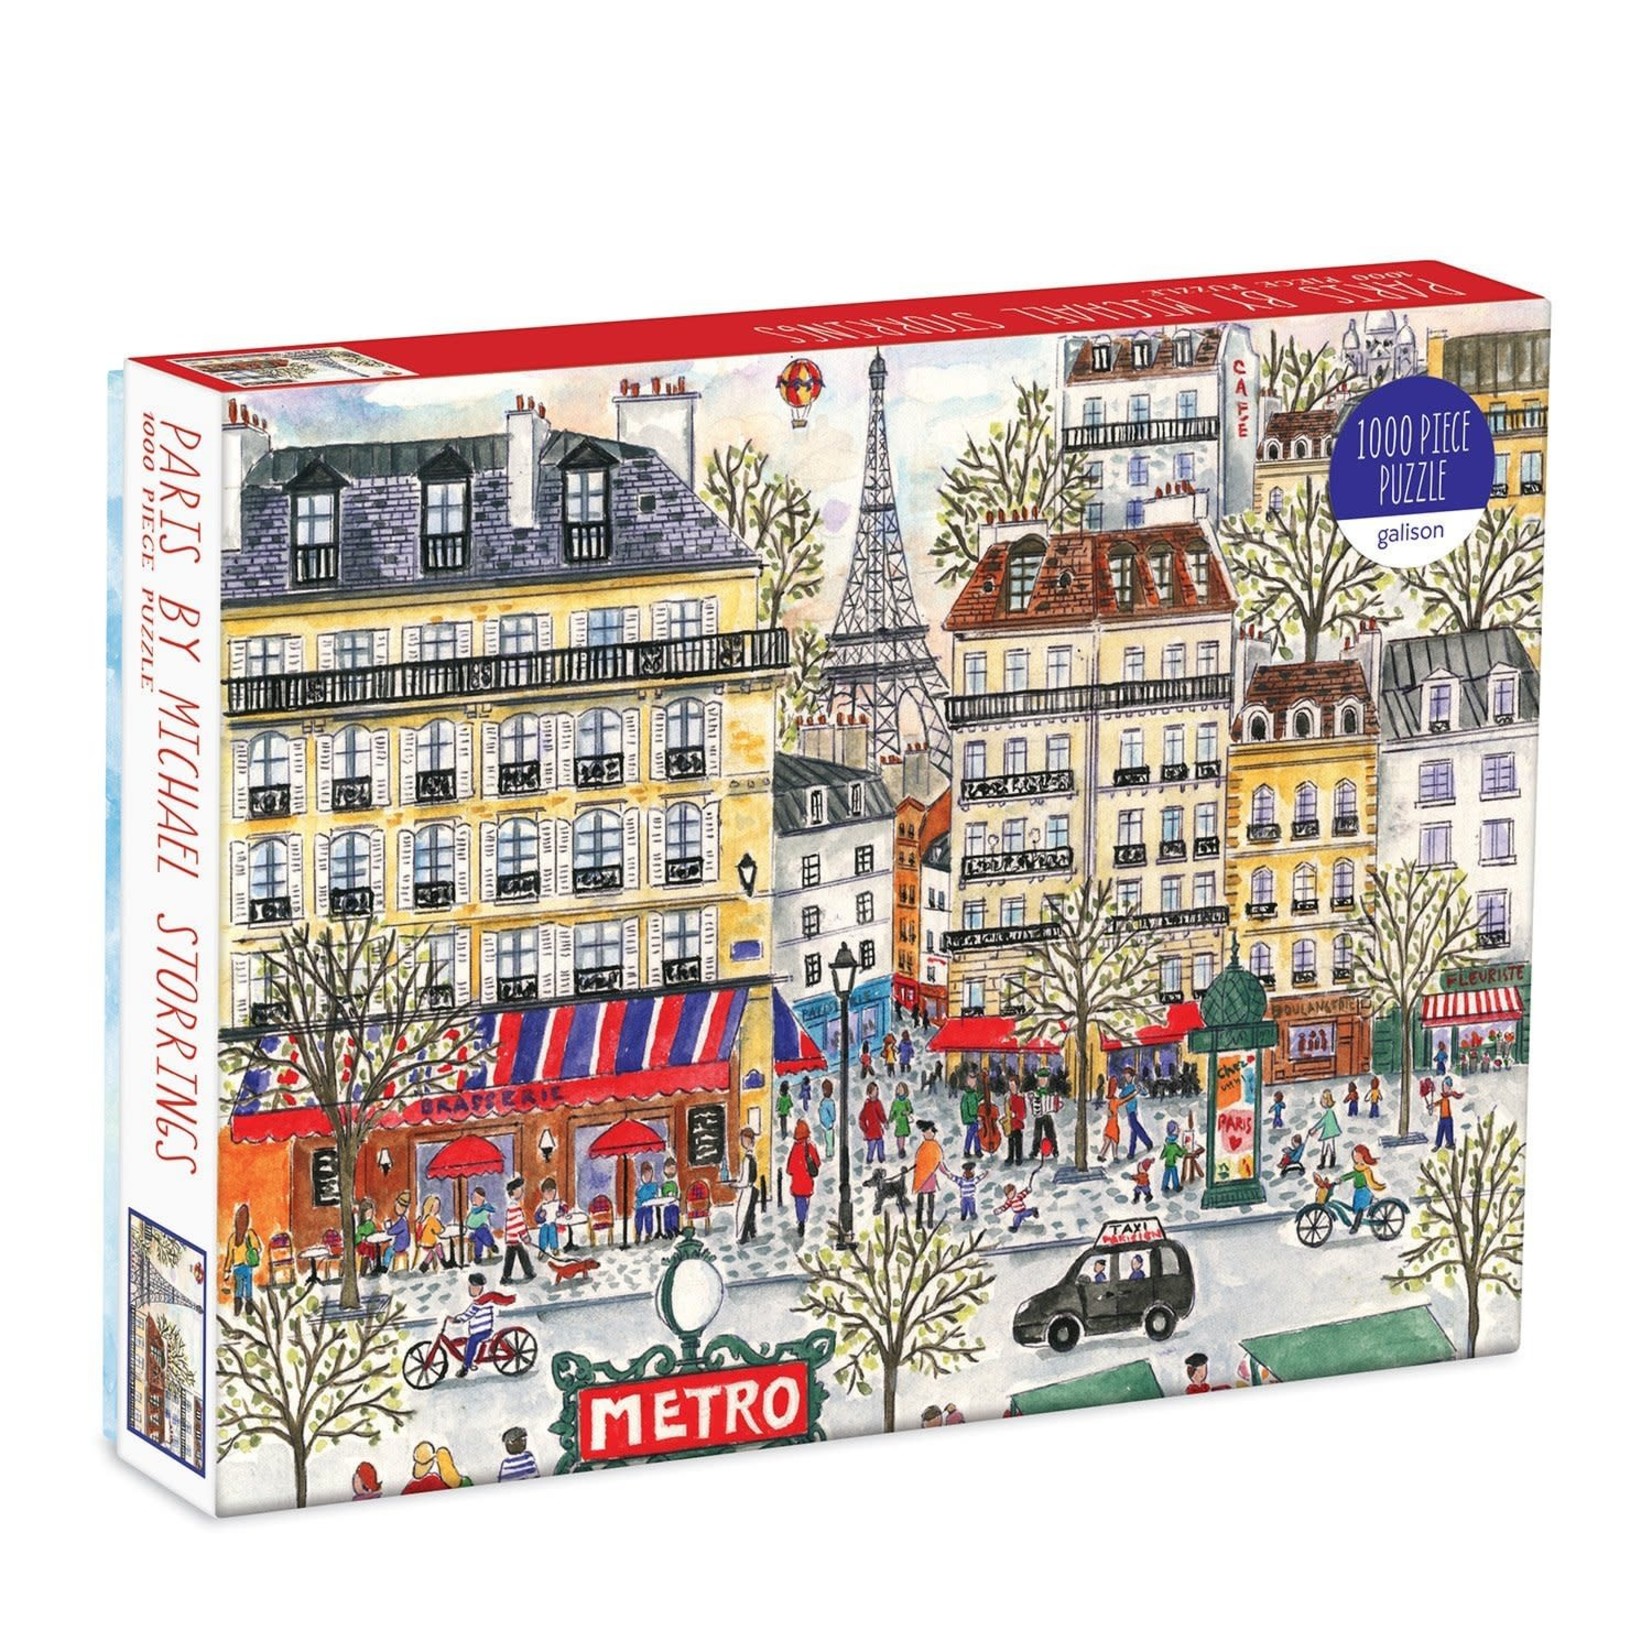 Galison Paris by Michael Storrings, 1000-Piece Jigsaw Puzzle